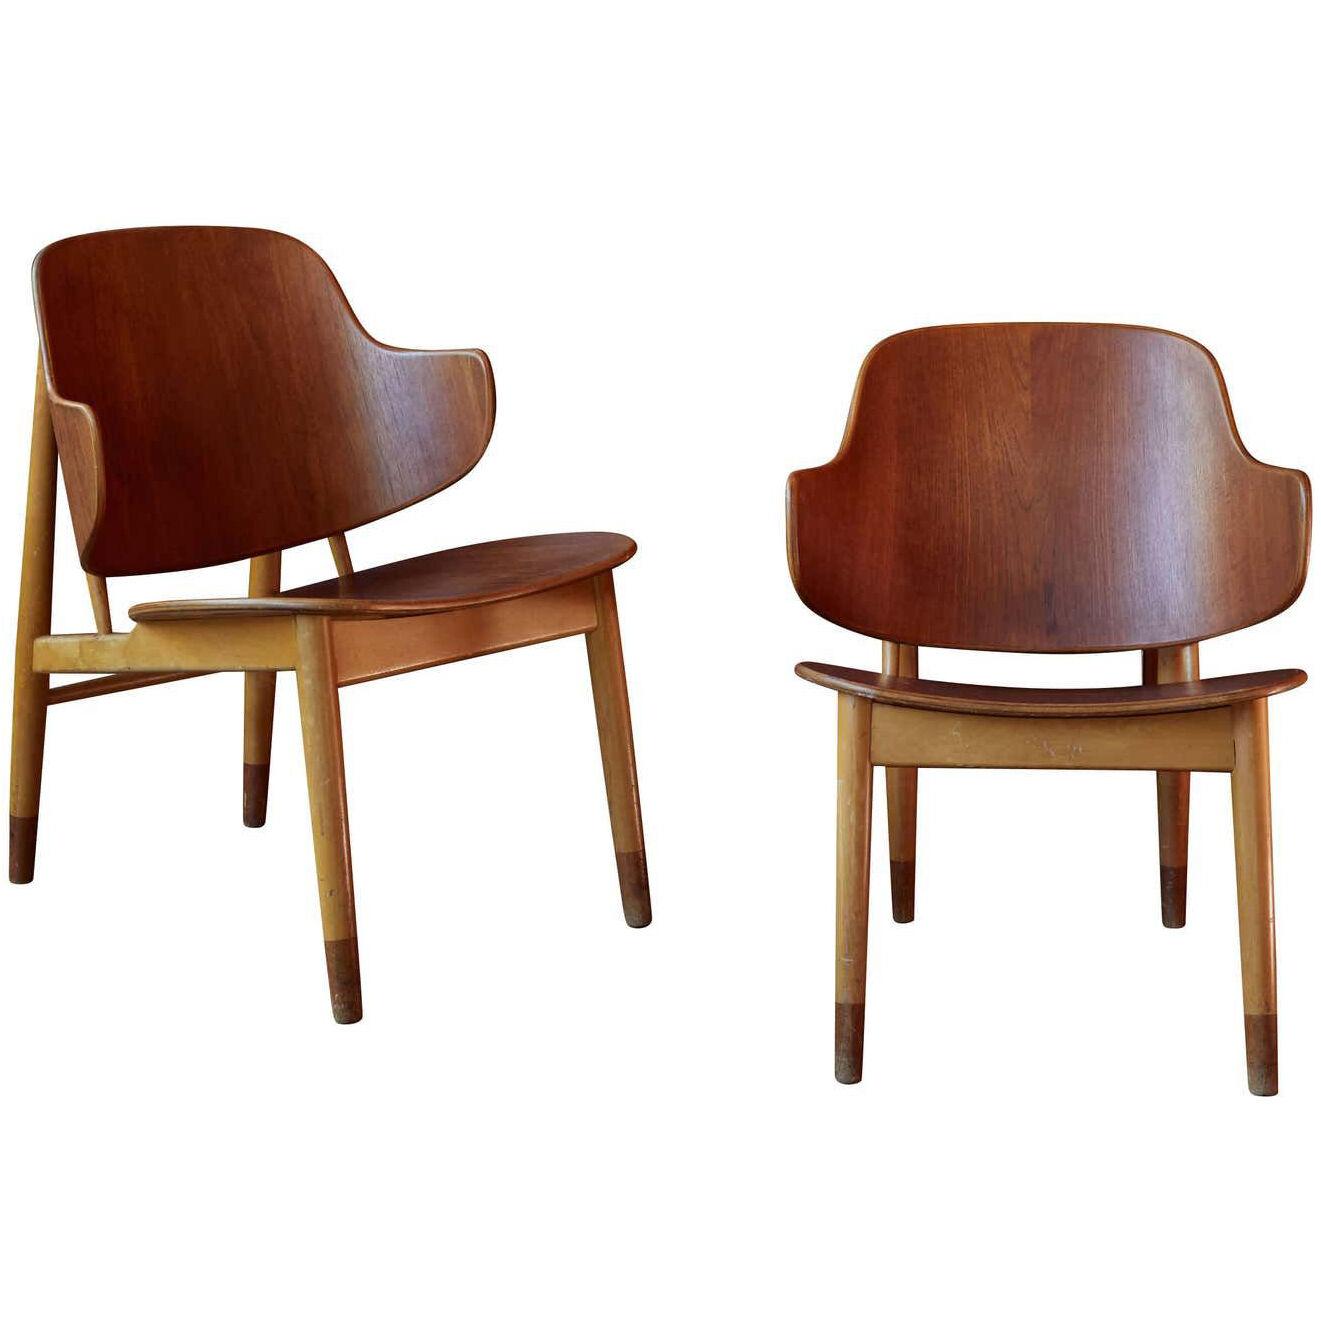 Ib Kofod-Larsen Chairs for Christiansen & Larsen